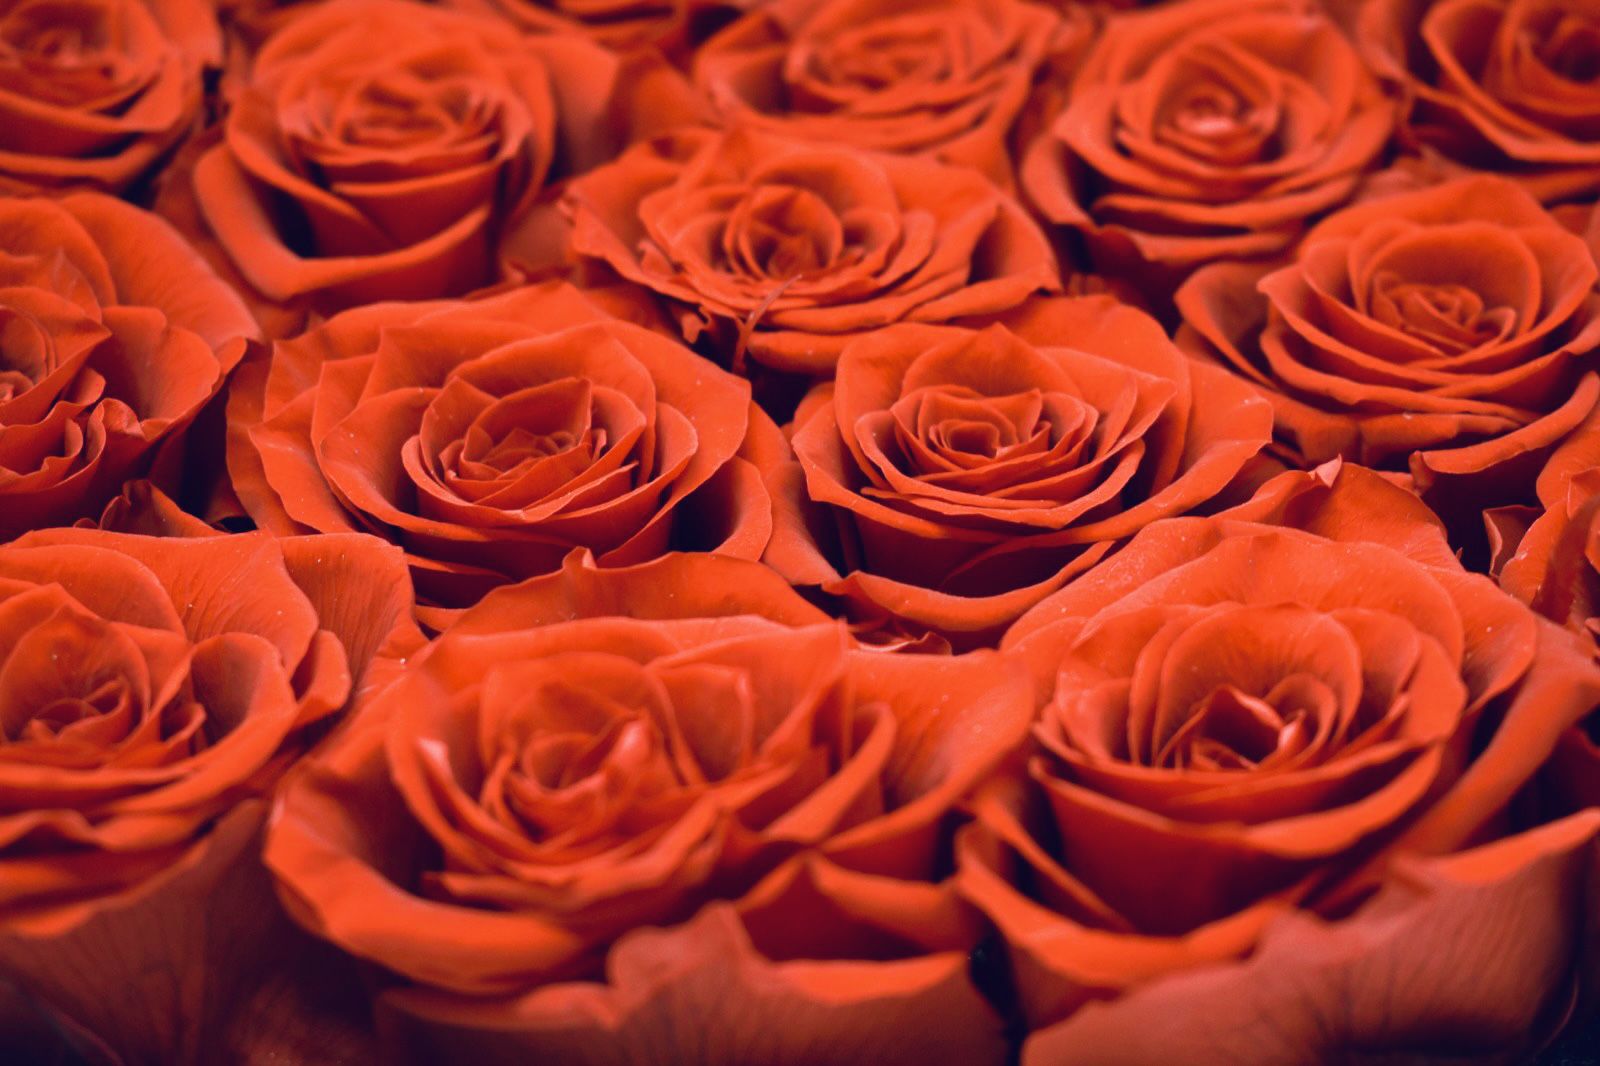 Red Eternal Roses Heart Shape Box Roses Lasting Preserved Flowers Bday Anniversary Gift Present immortal Roses long lasting 